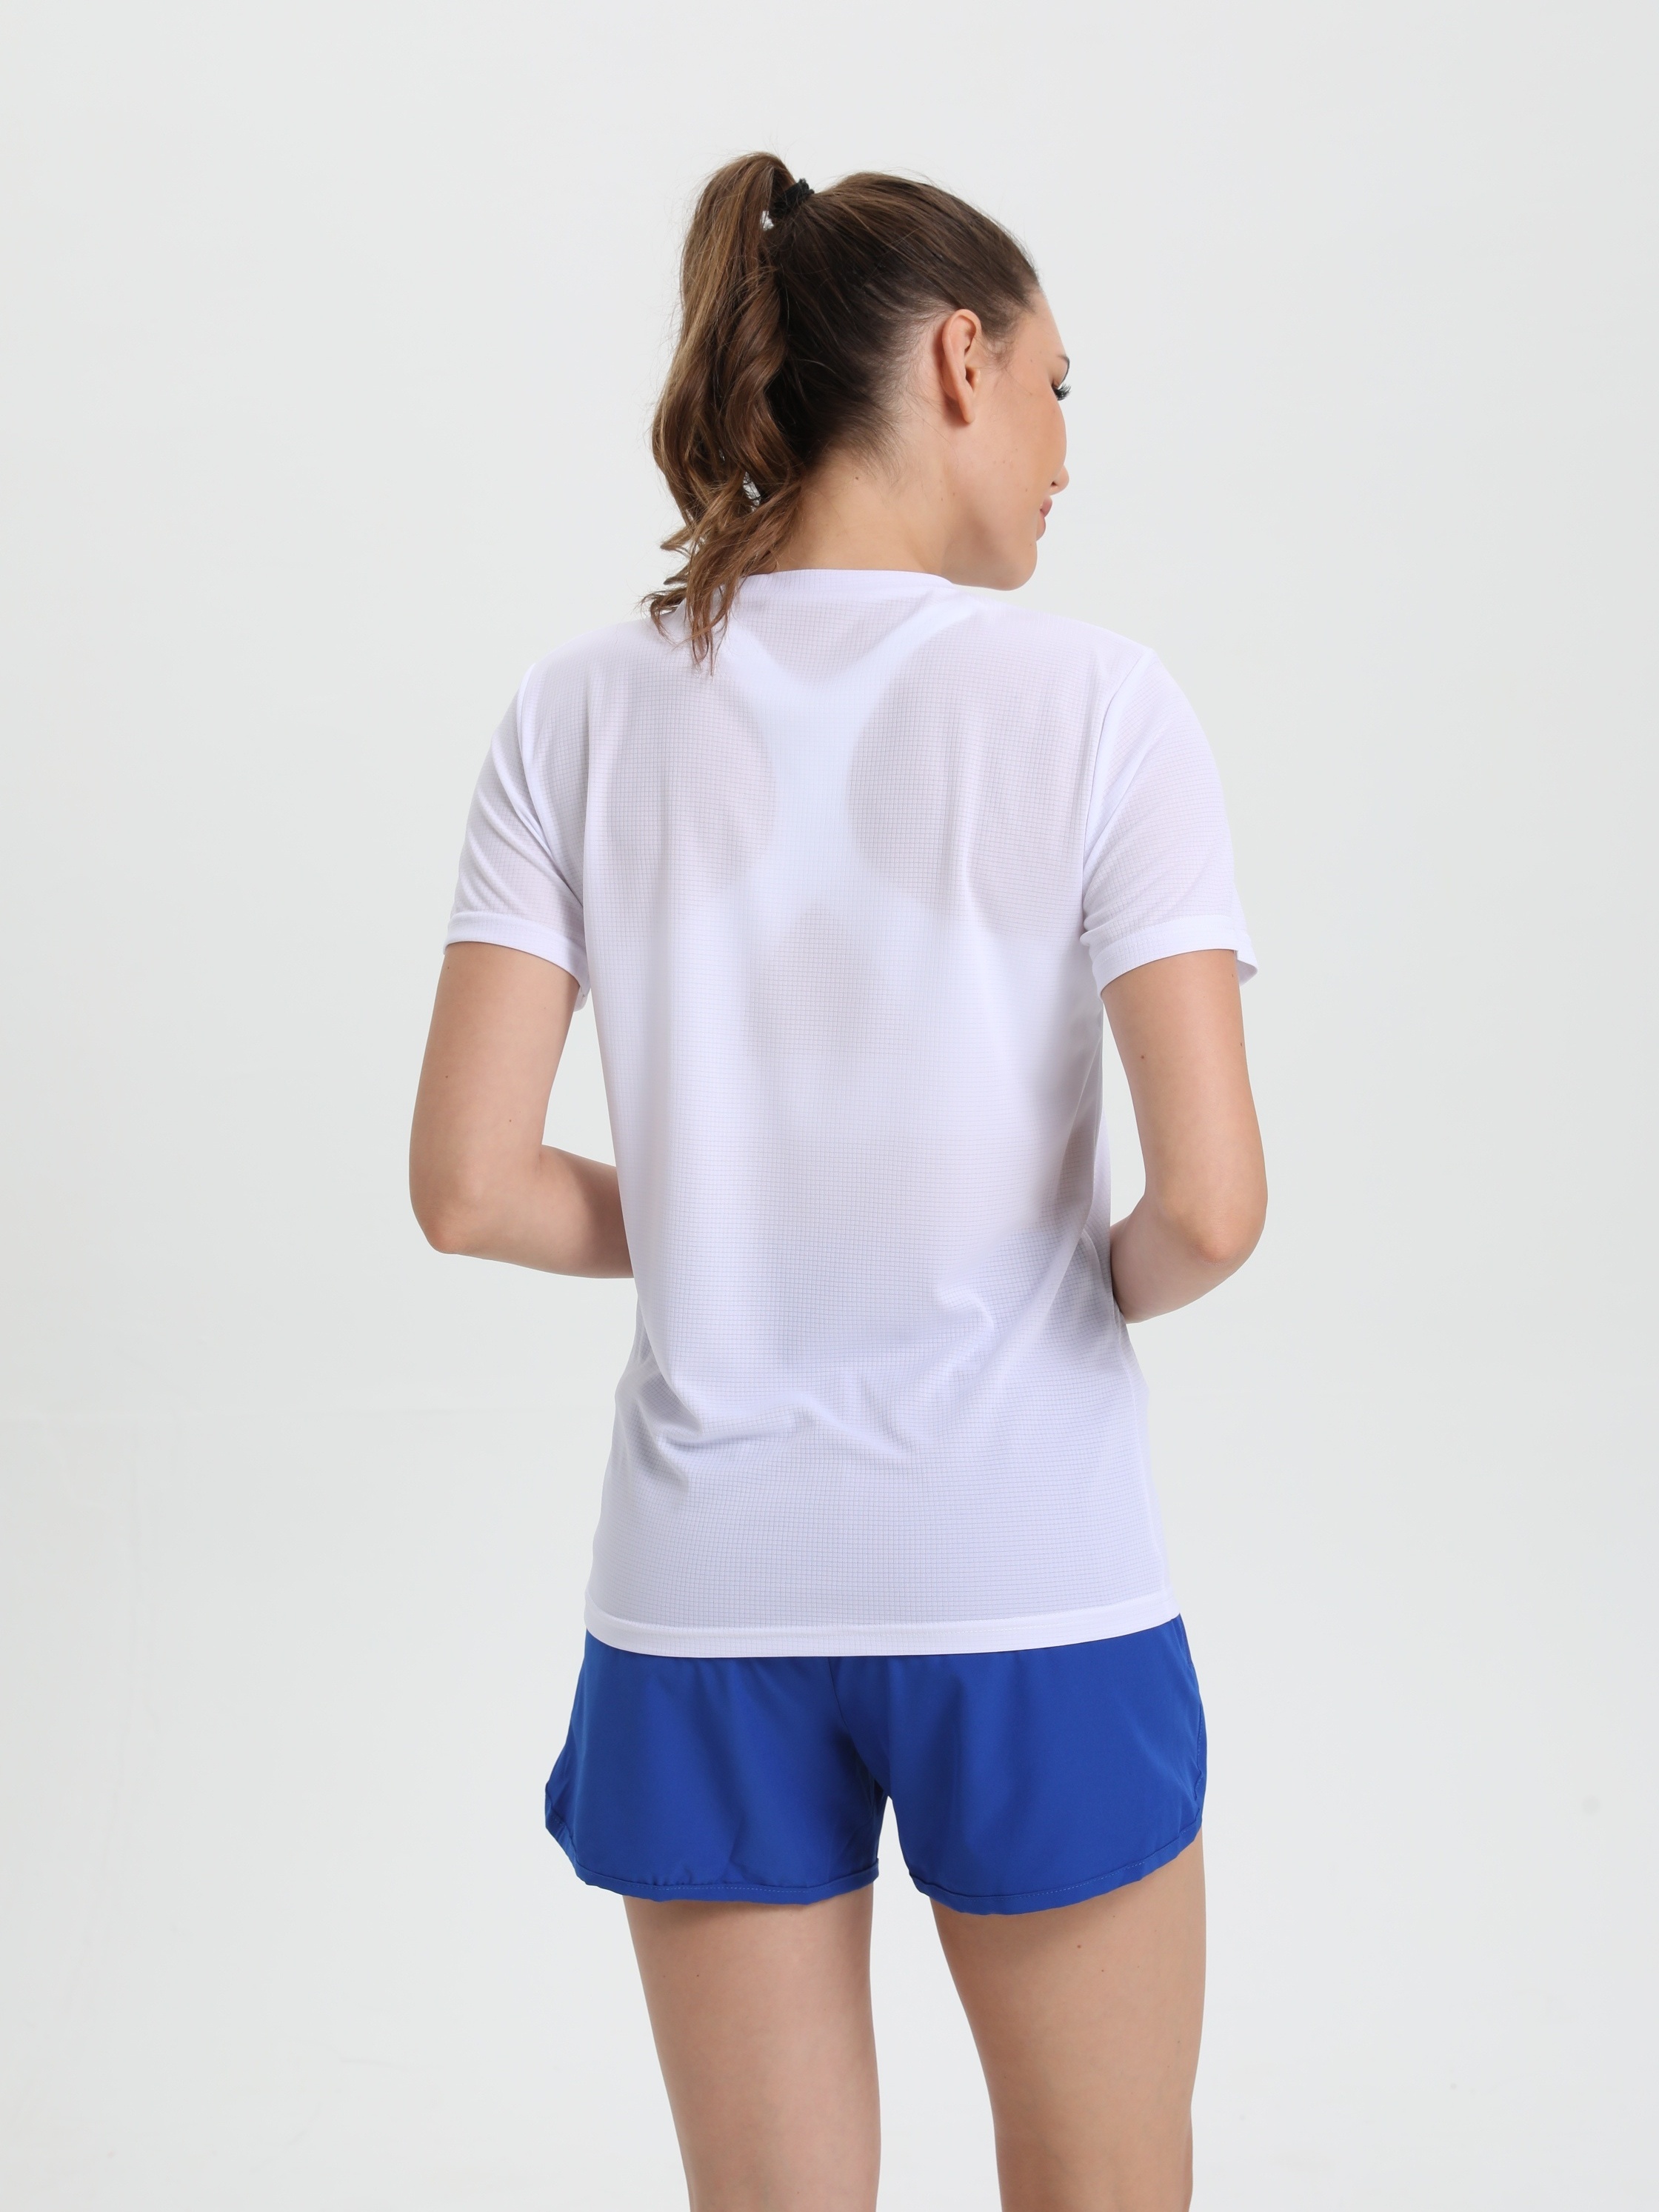 Women's Short Sleeve Running Shirts,Lightweight Quick Dry Athletic